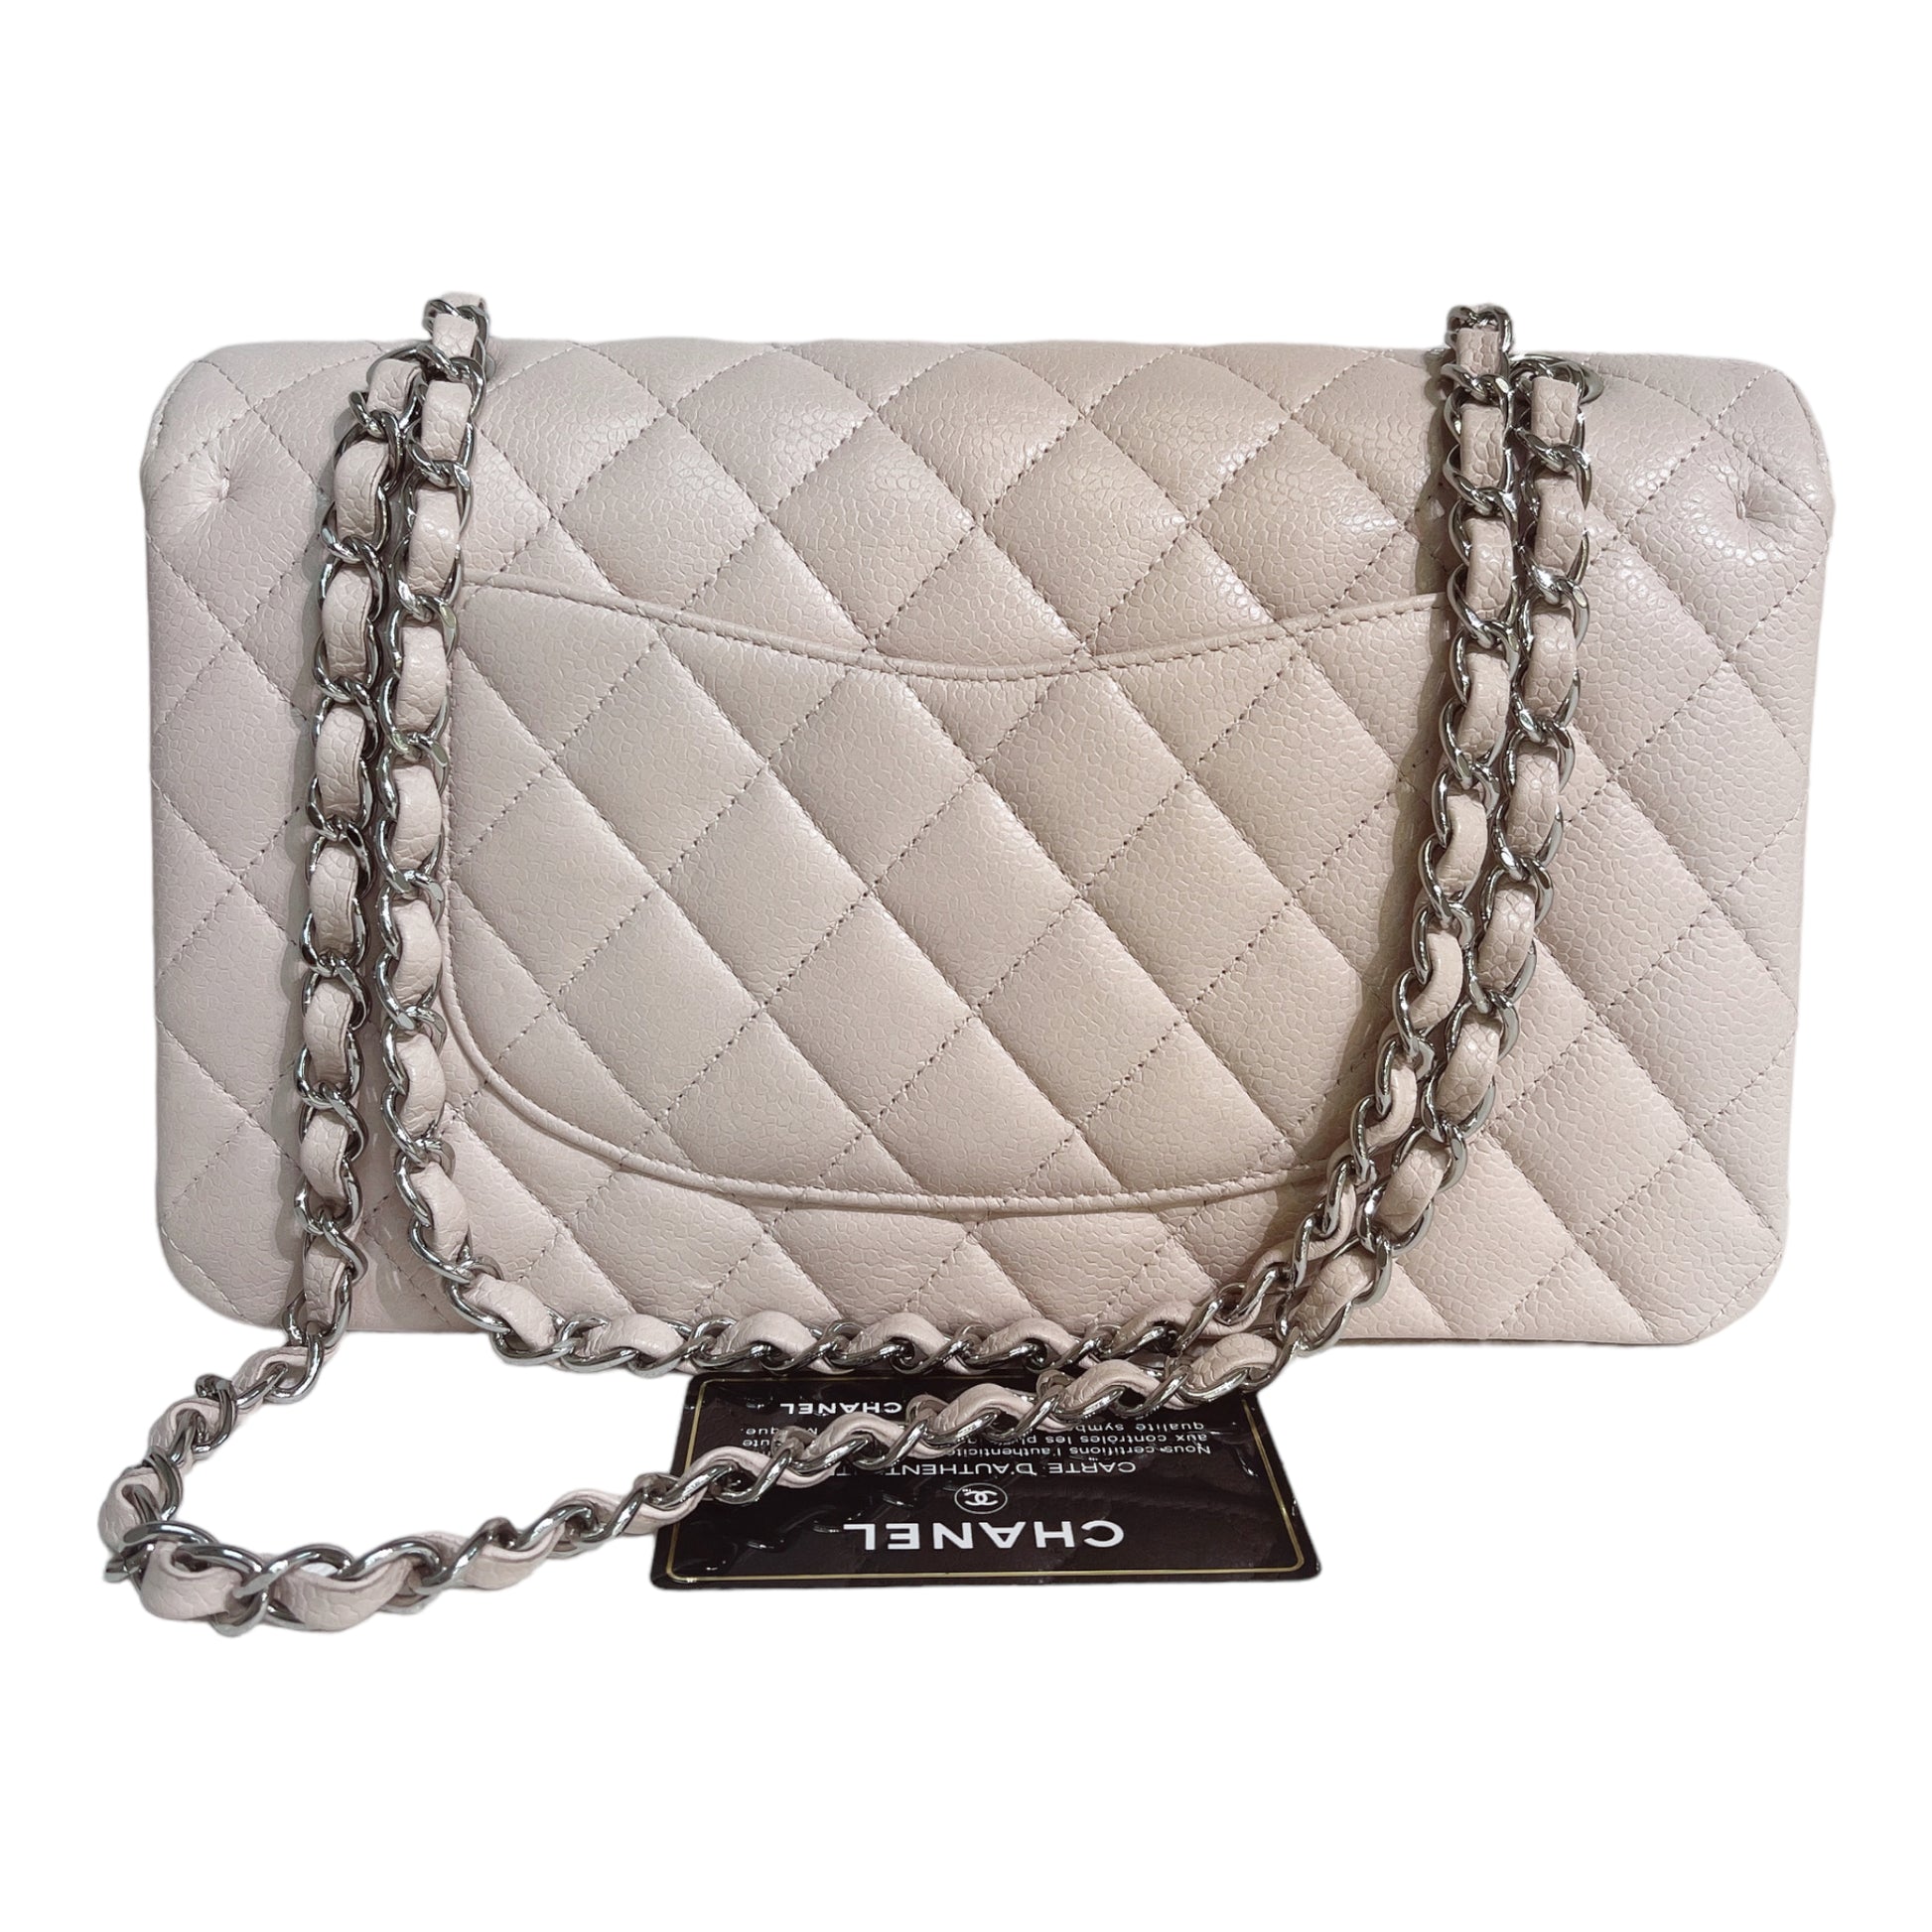 white chanel handbags for sale